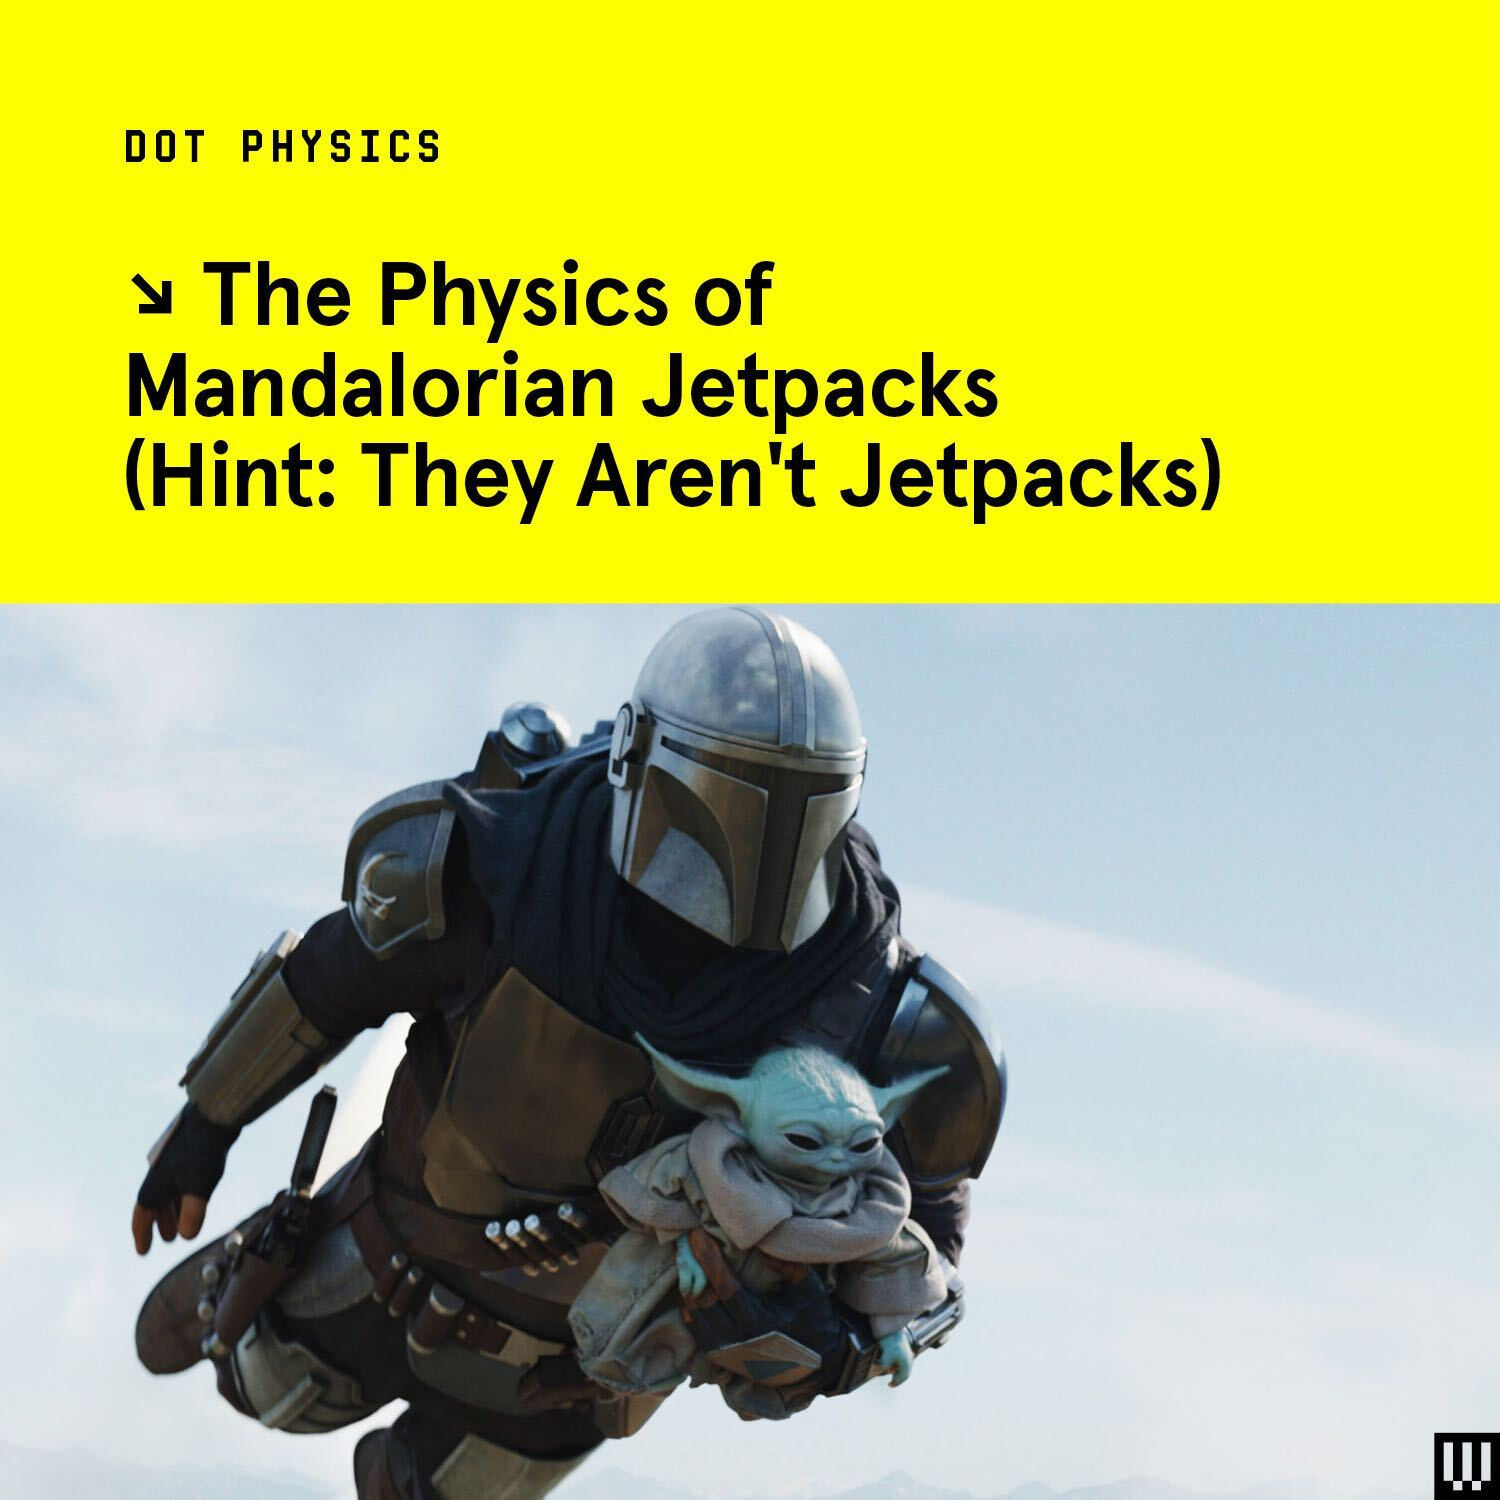 How do jetpacks work?